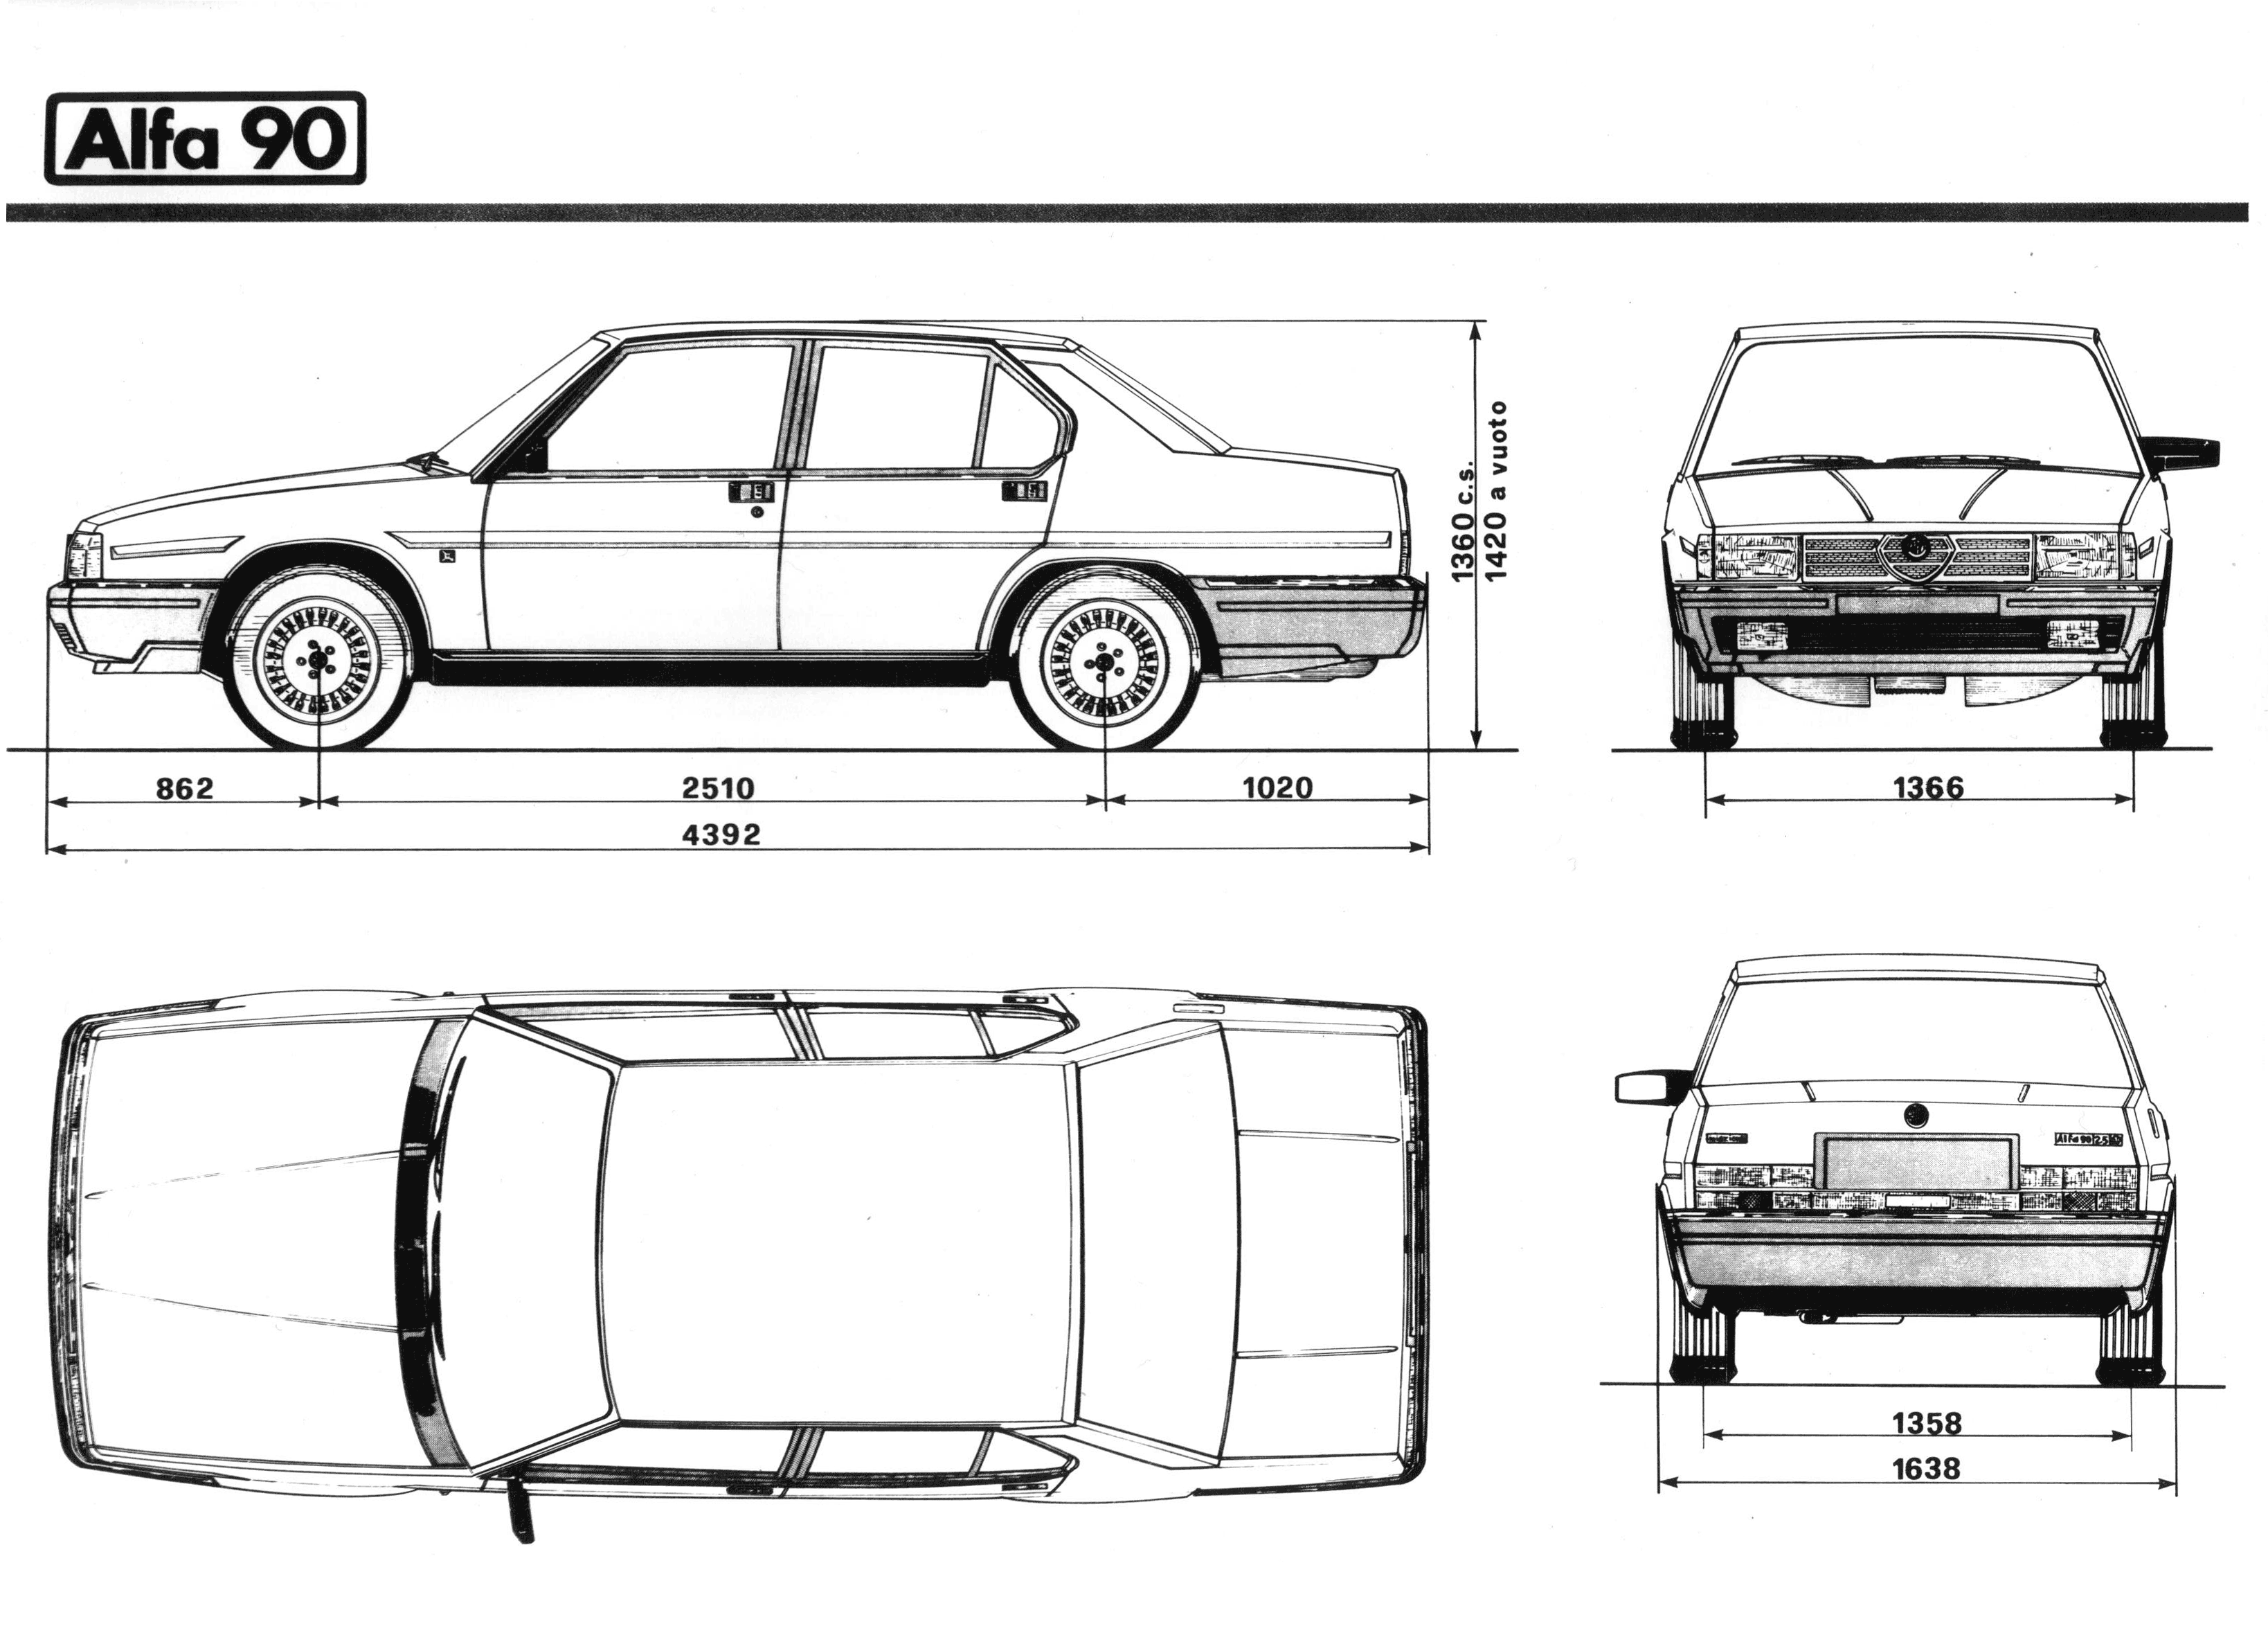 Alfa Romeo 90 blueprint